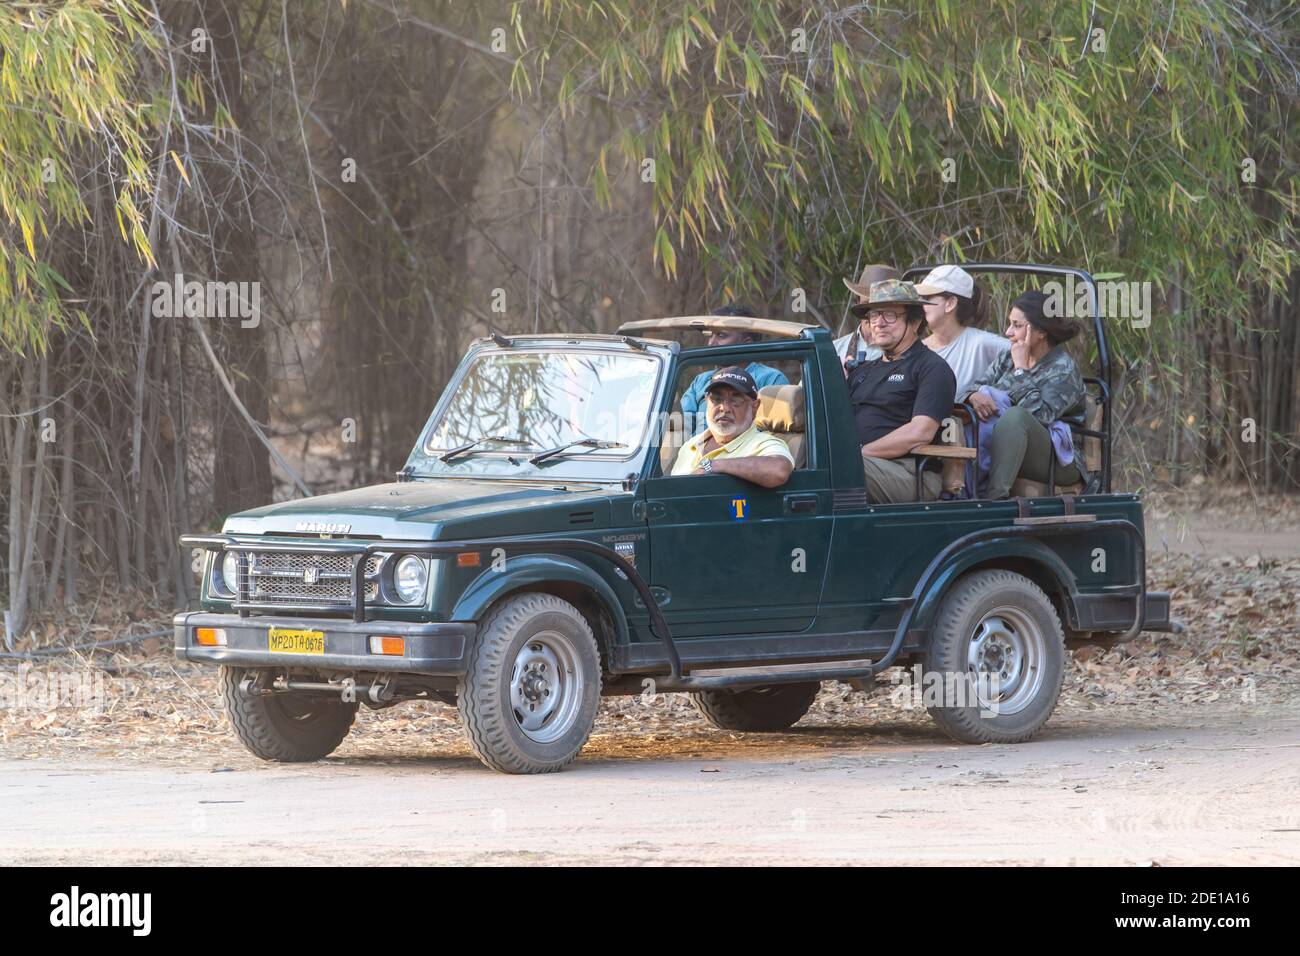 Wildlife safari jeep tours guests in Bandhavgarh National Park in India Stock Photo